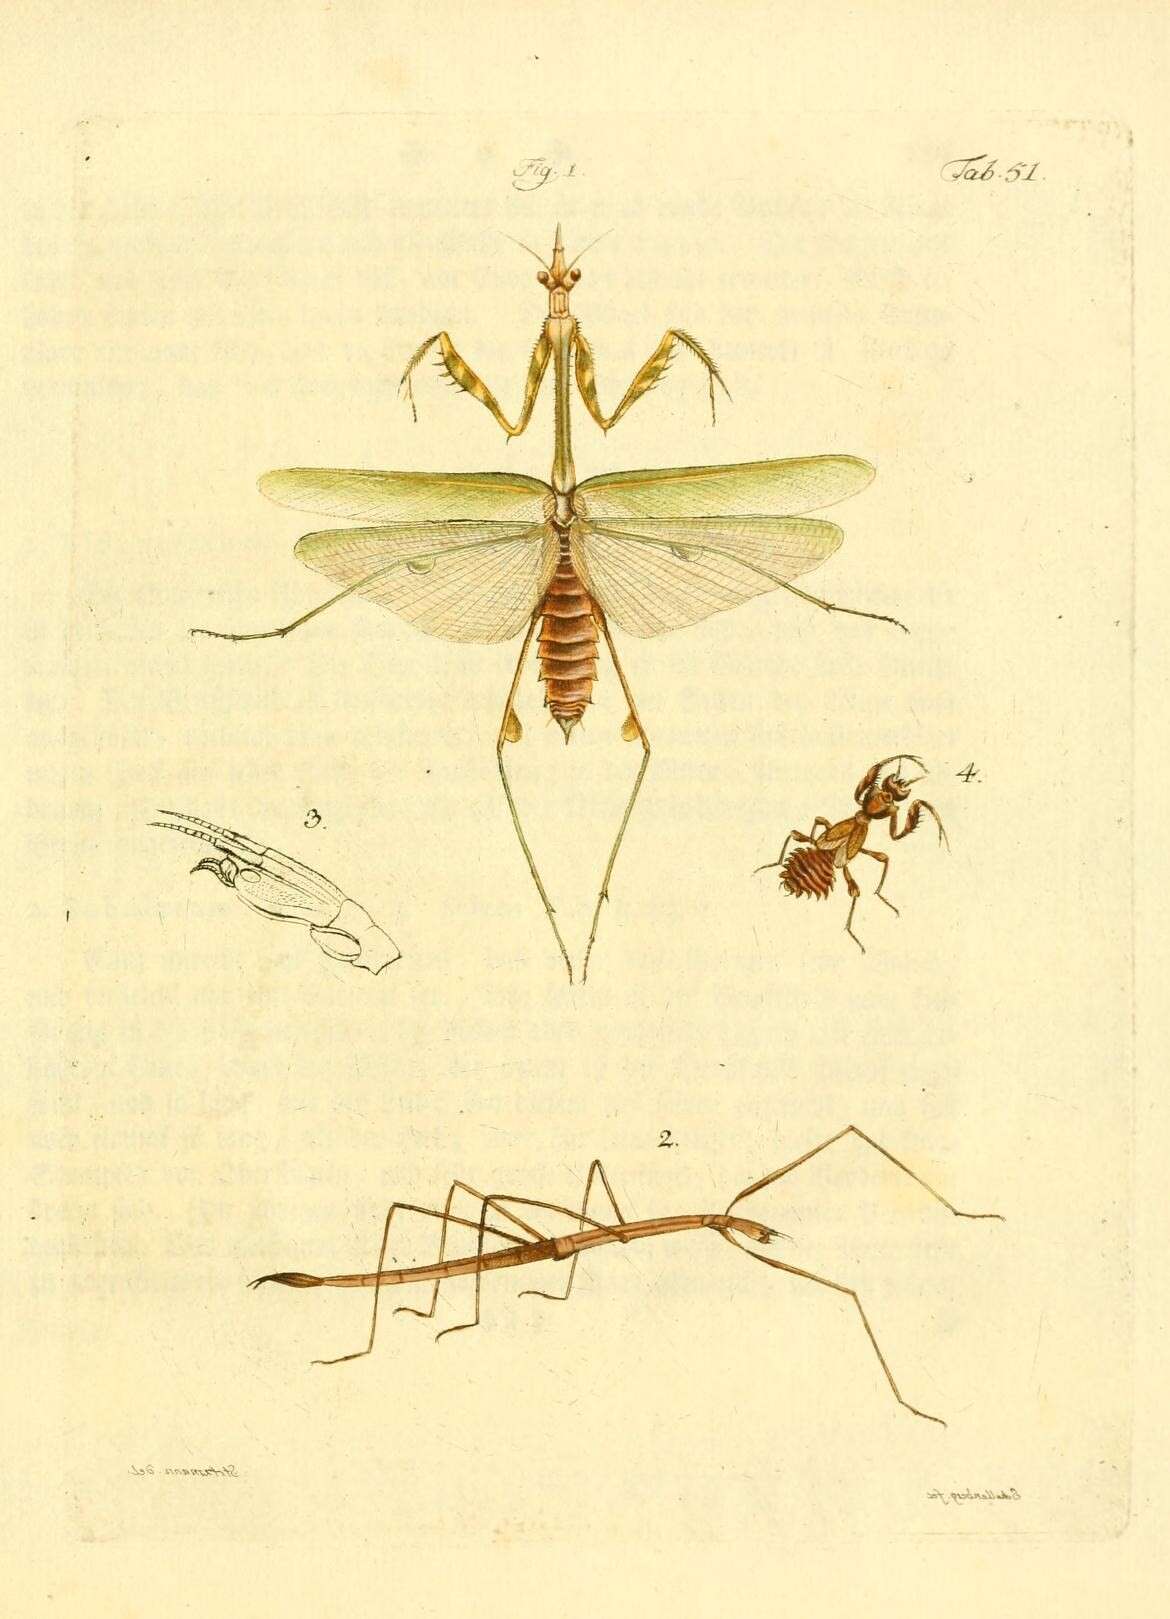 Image of conehead mantis